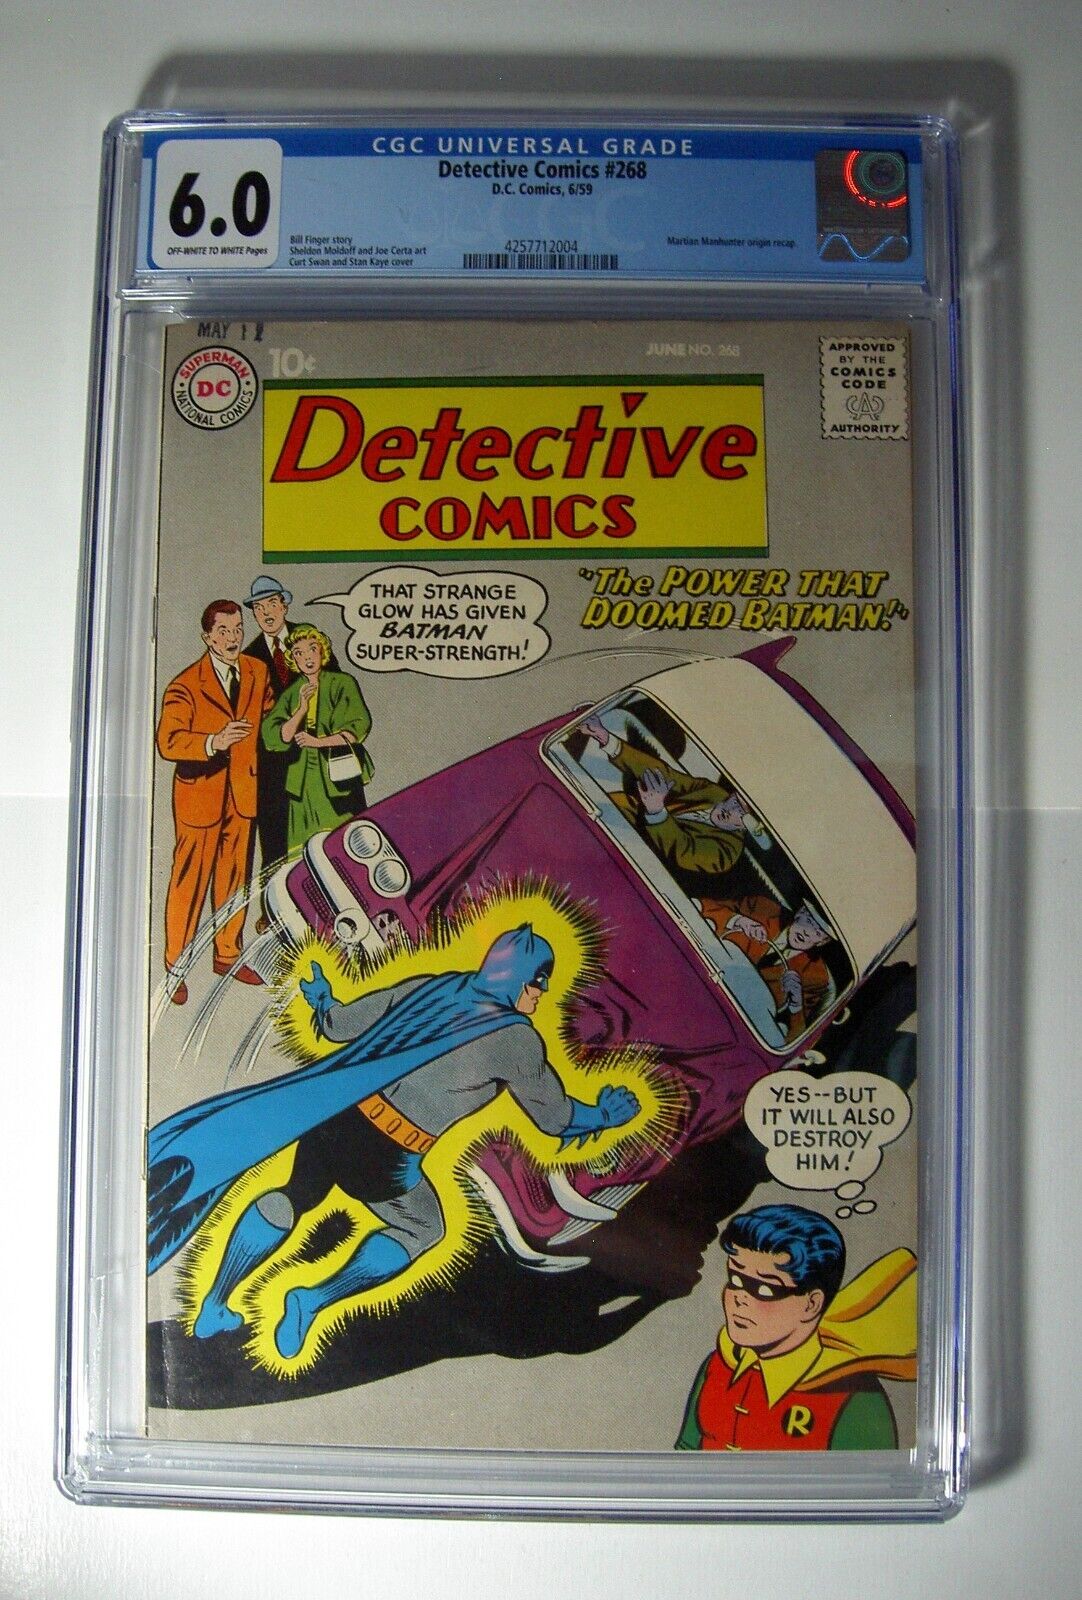 Detective Comics #268 (CGC 6.0)FN,1959,Batman/Robin,Free US ship, Curt Swan c/a